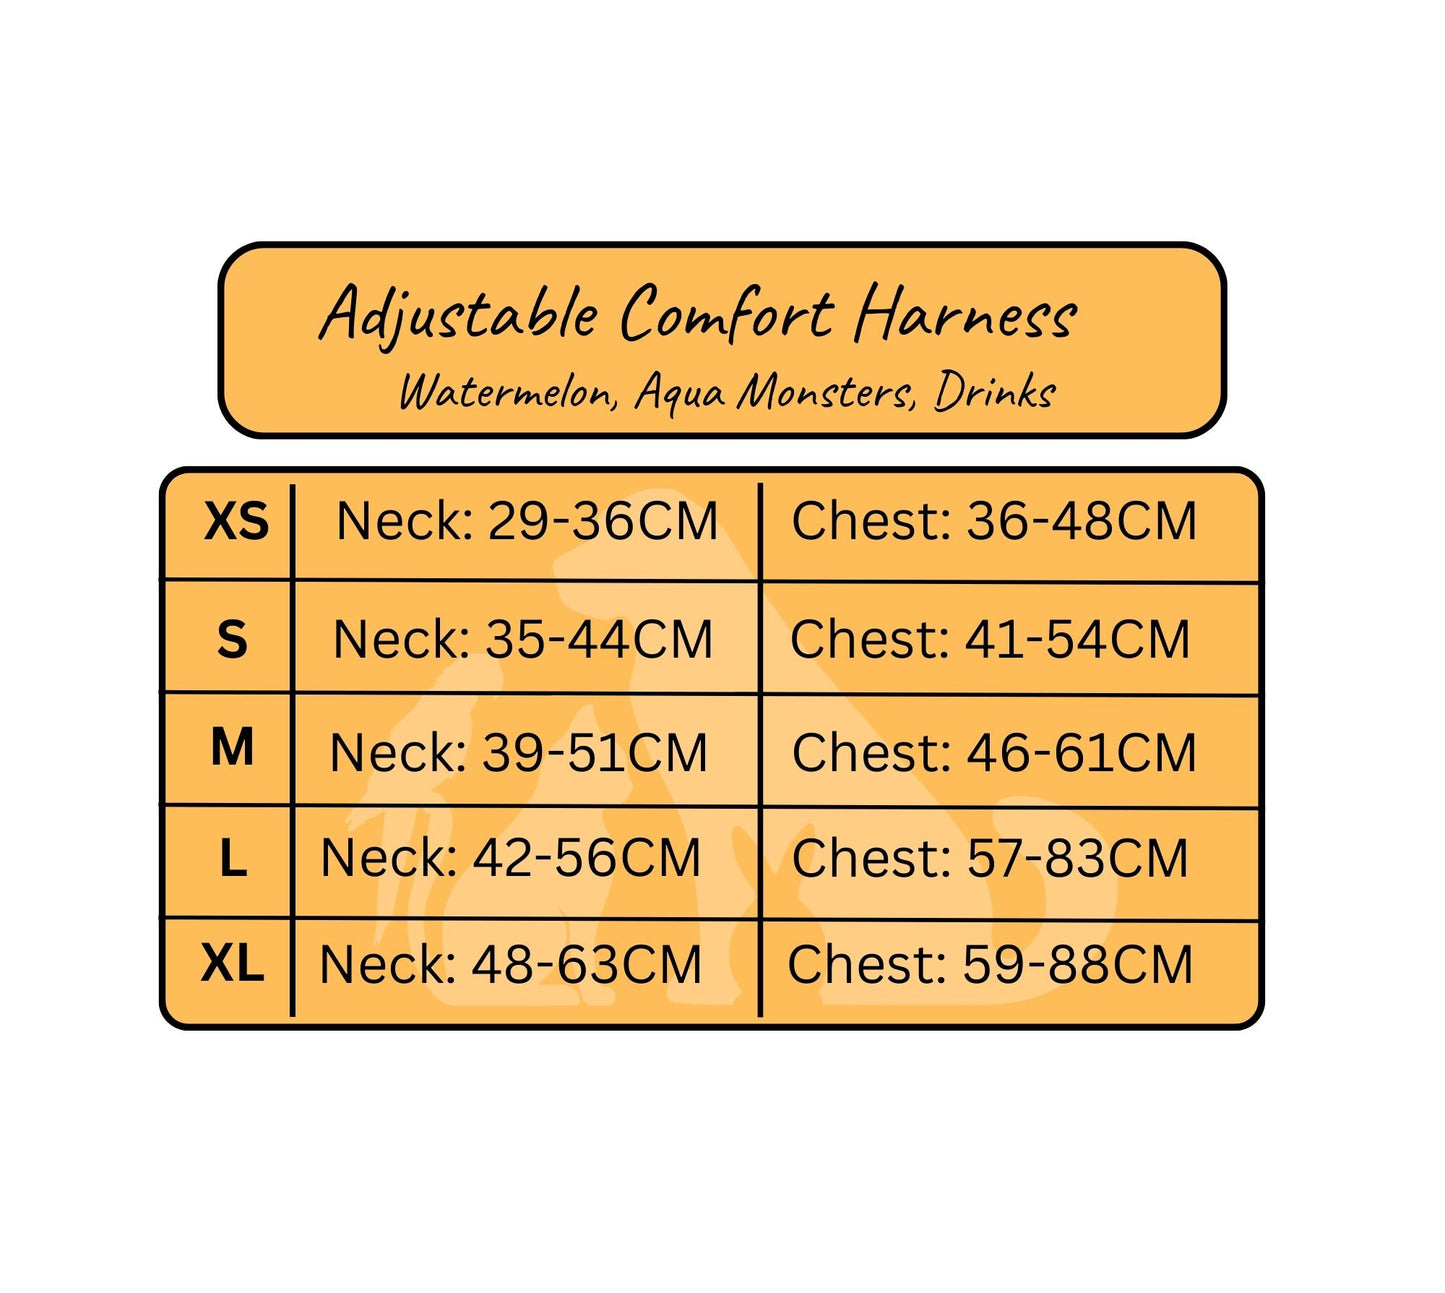 Adjustable Comfort Harness: DRINKS